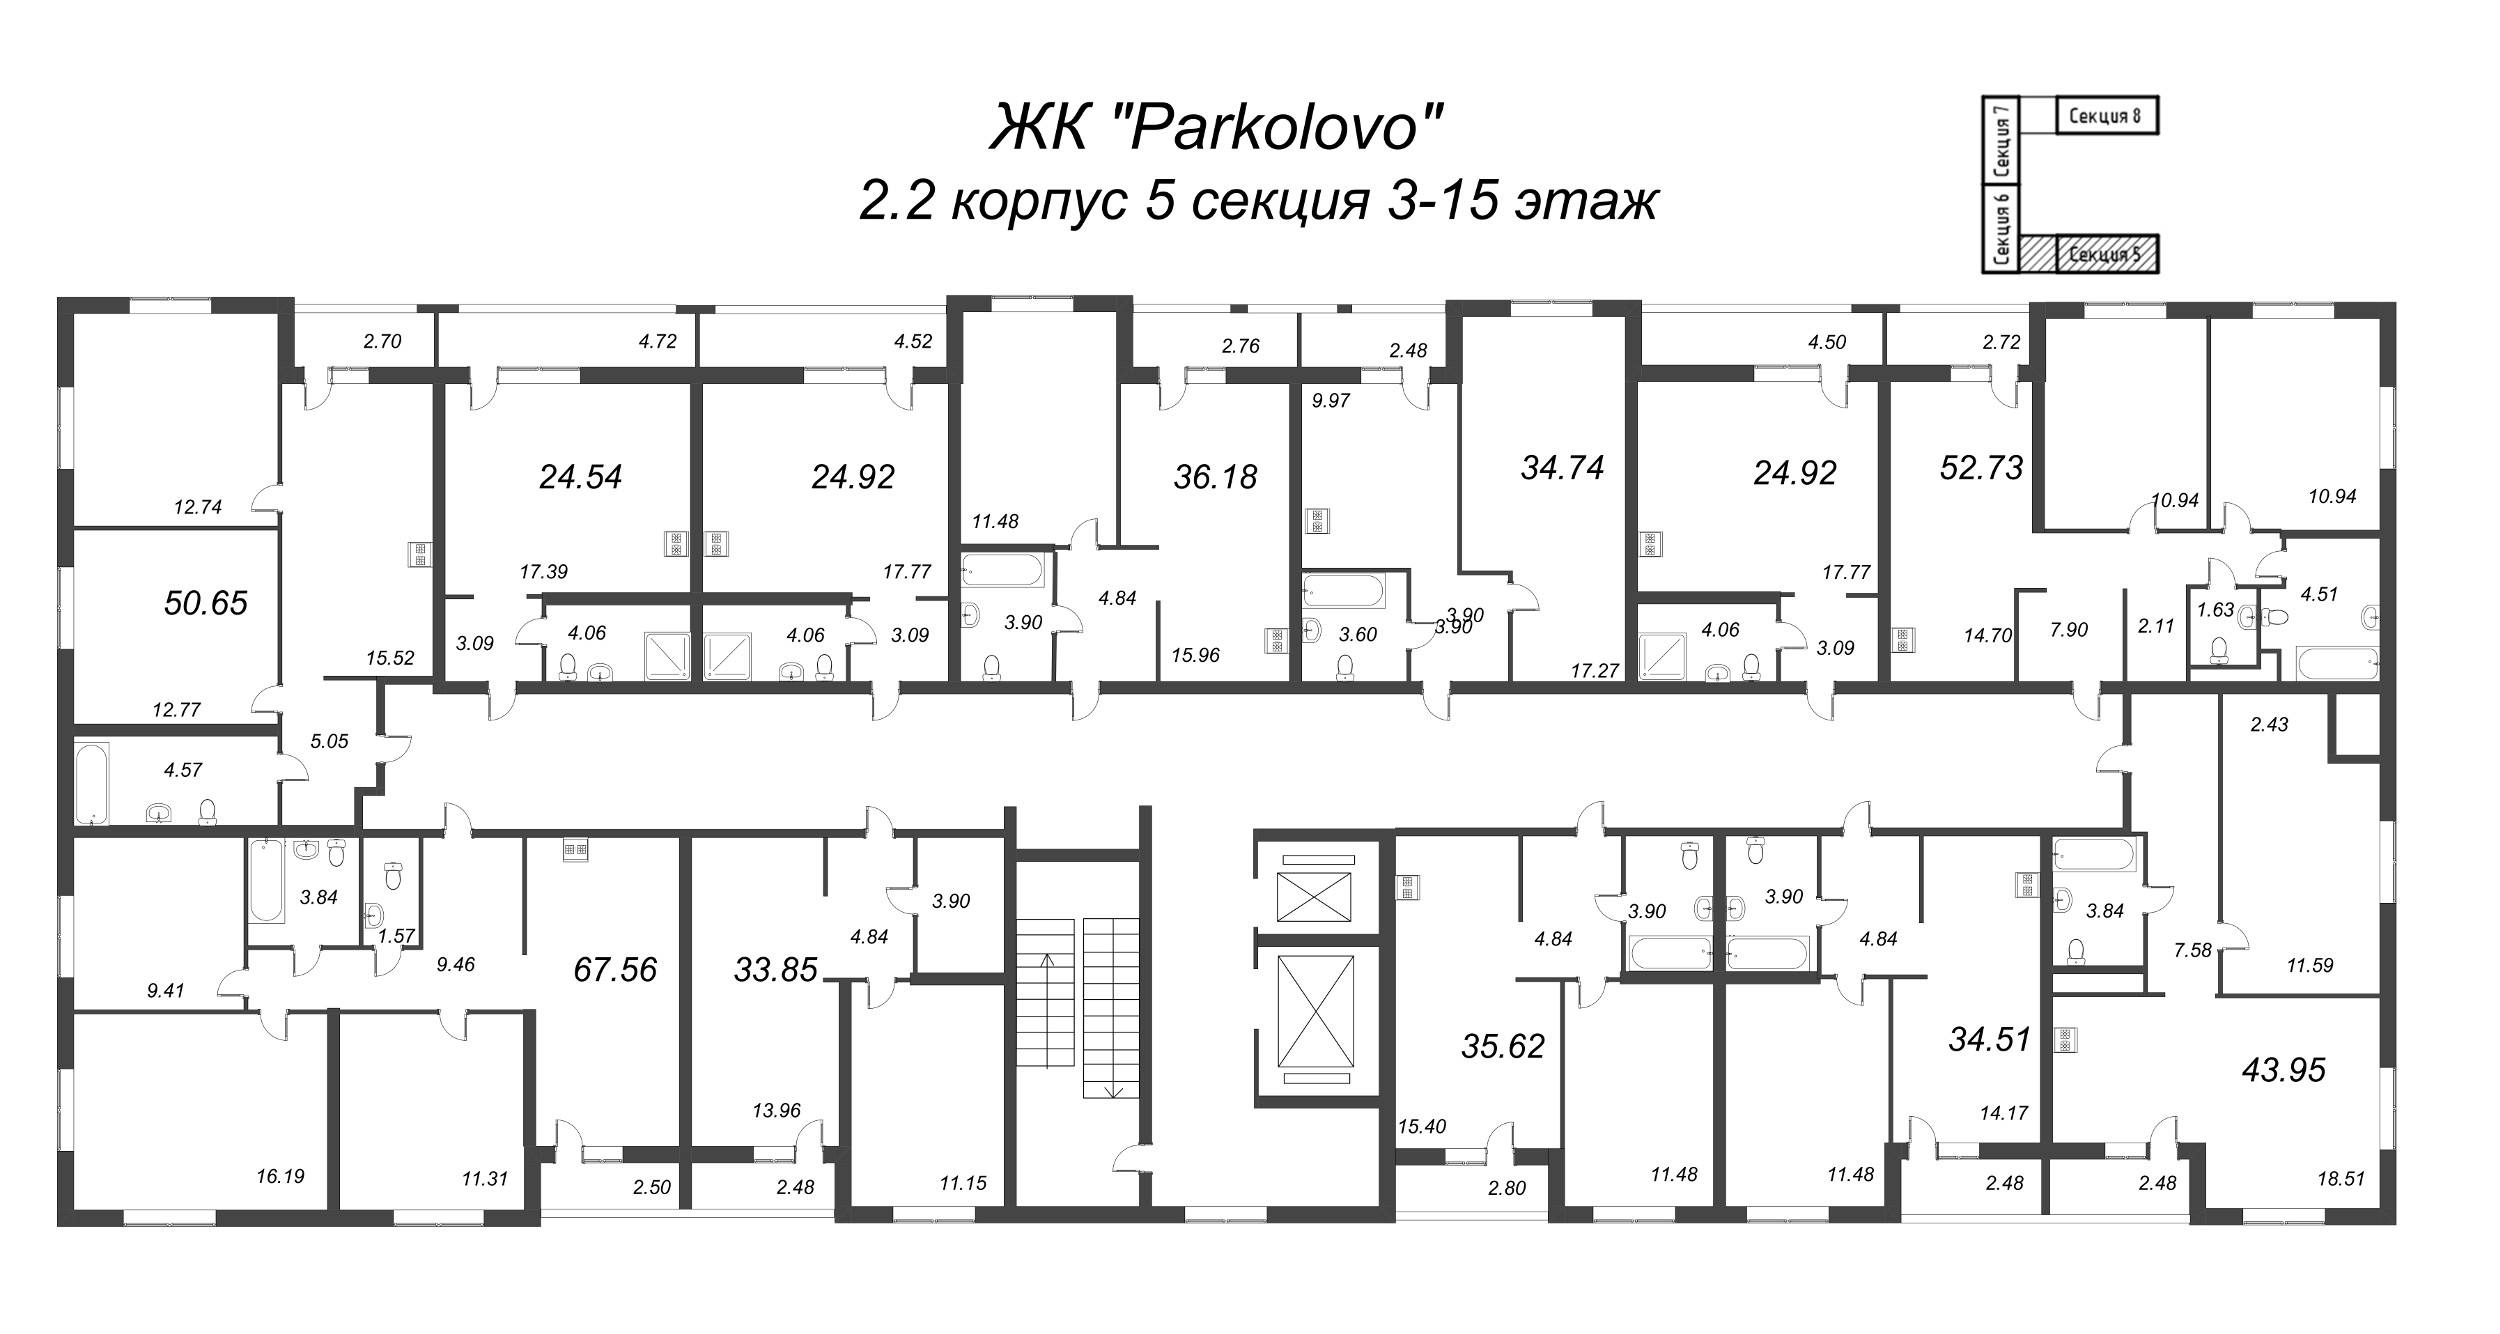 4-комнатная (Евро) квартира, 67.56 м² - планировка этажа